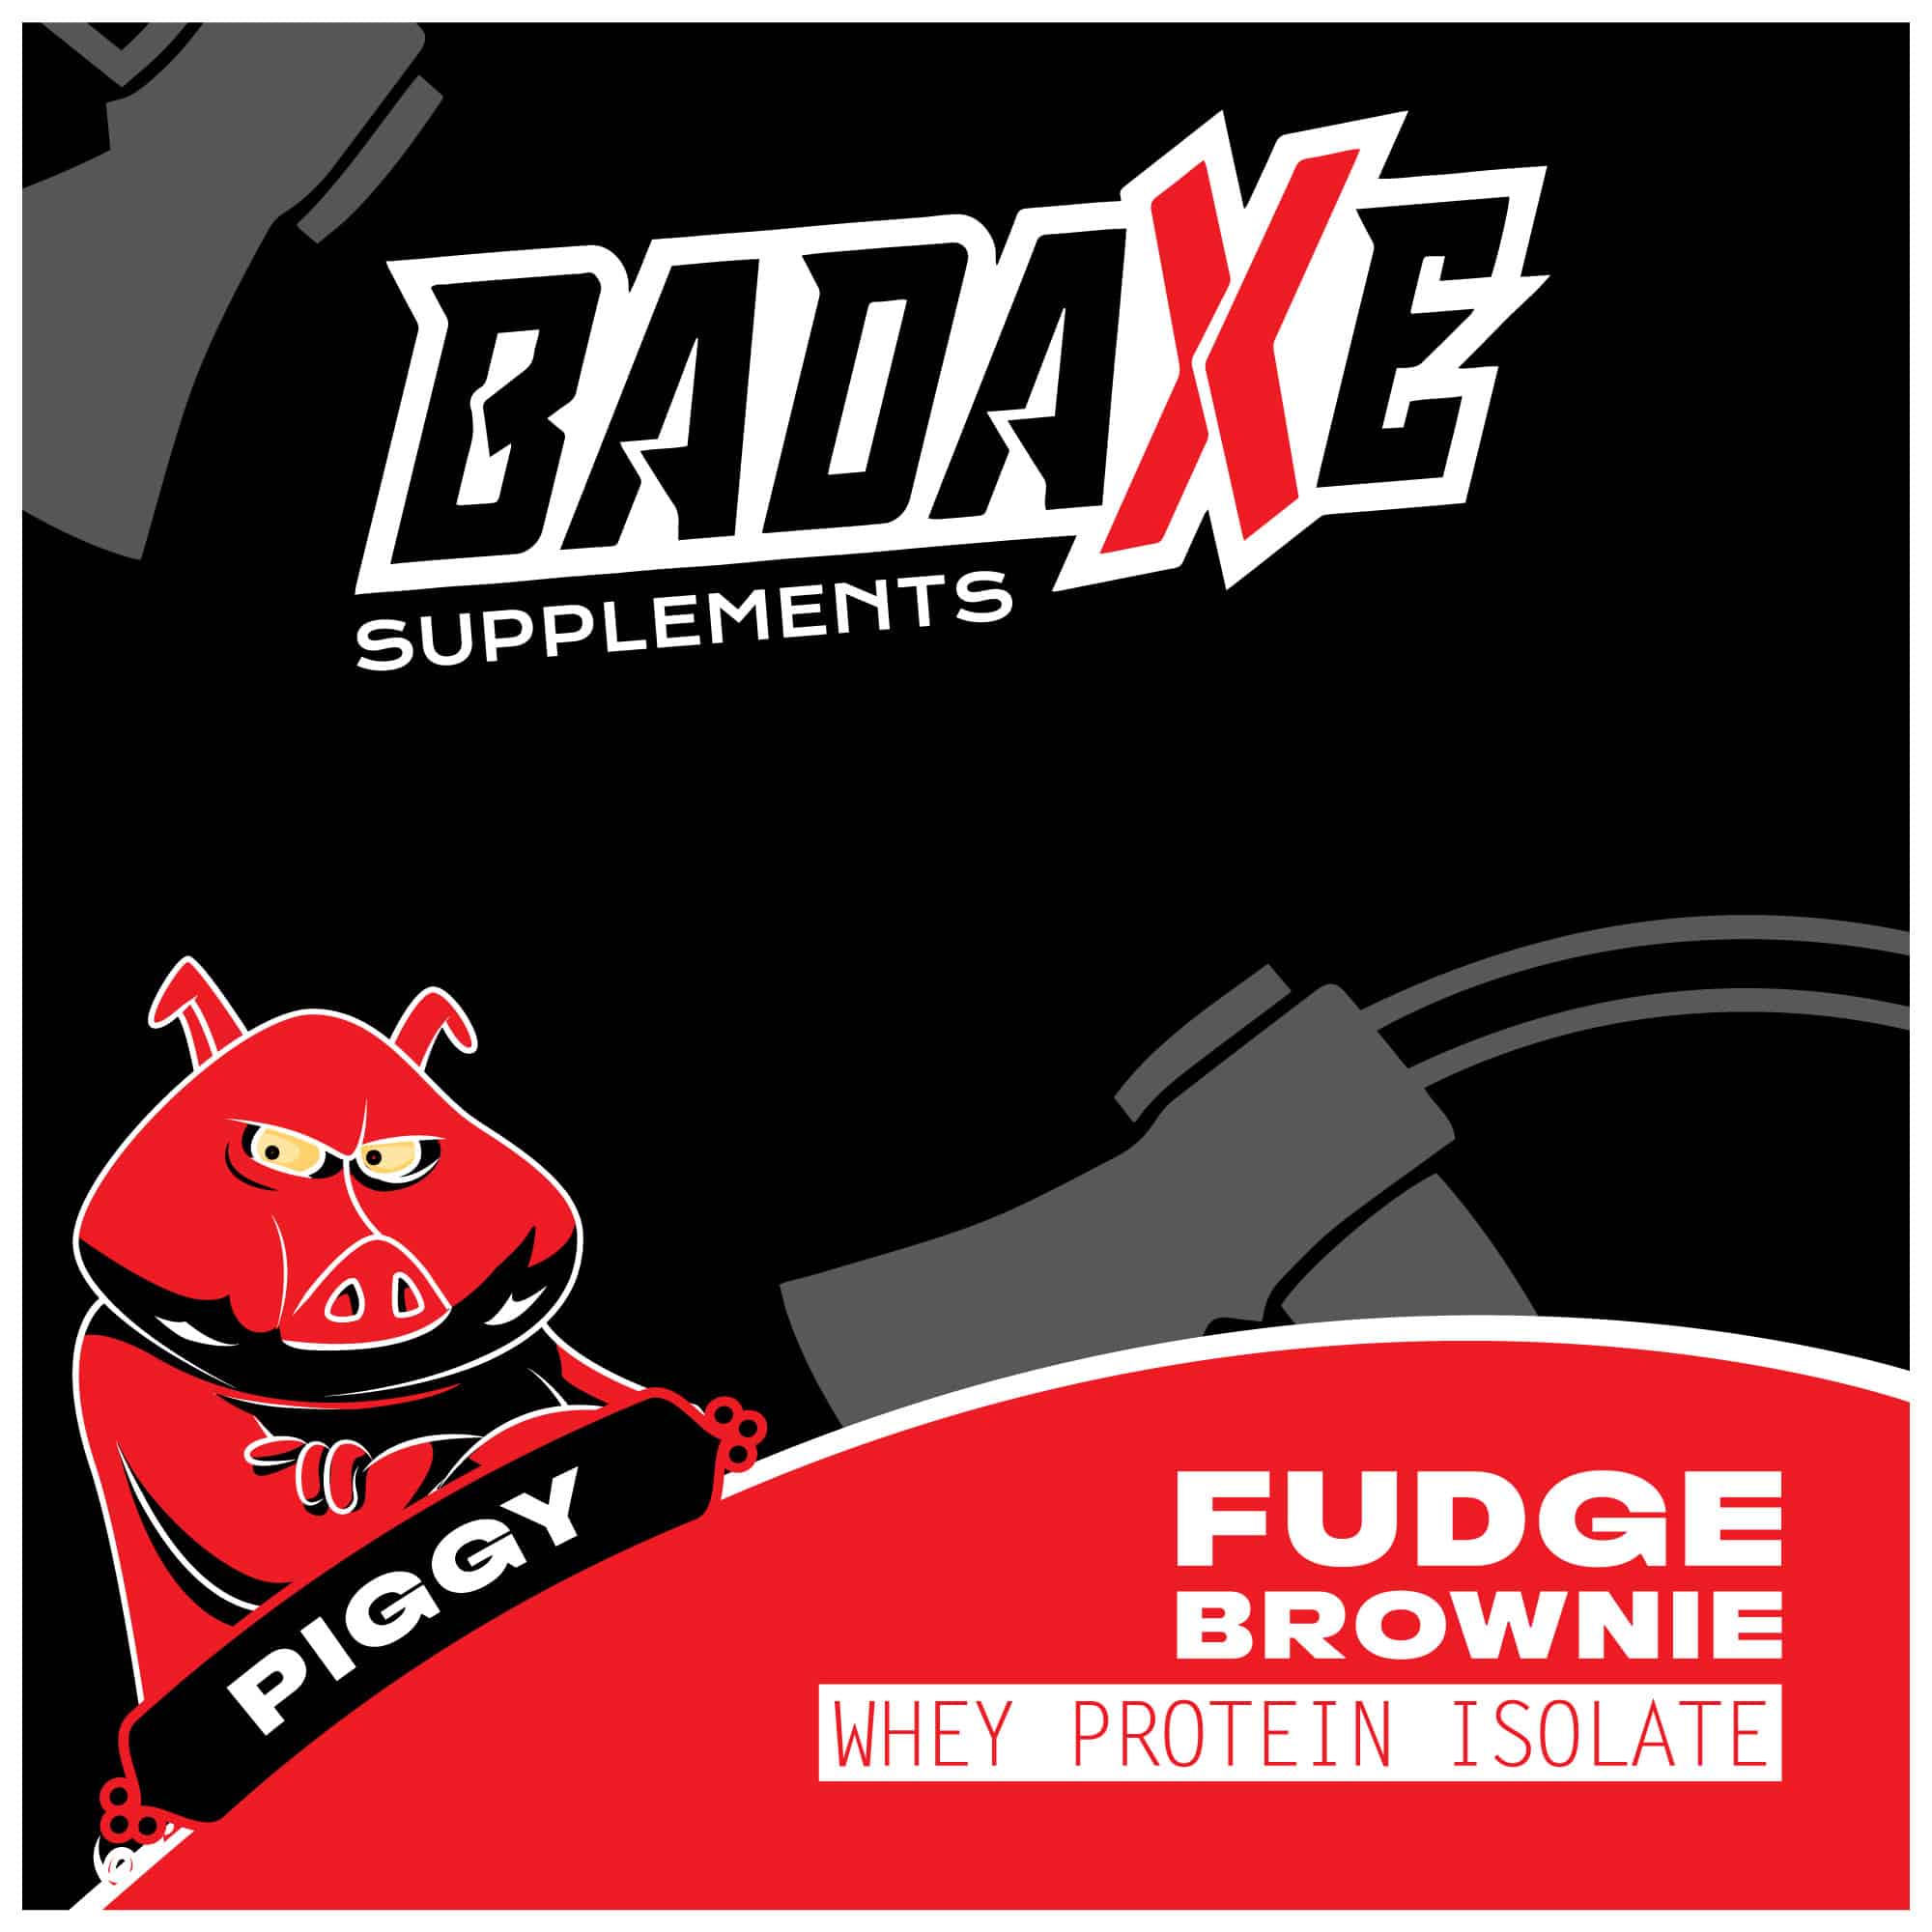 Badaxe Supplement Label